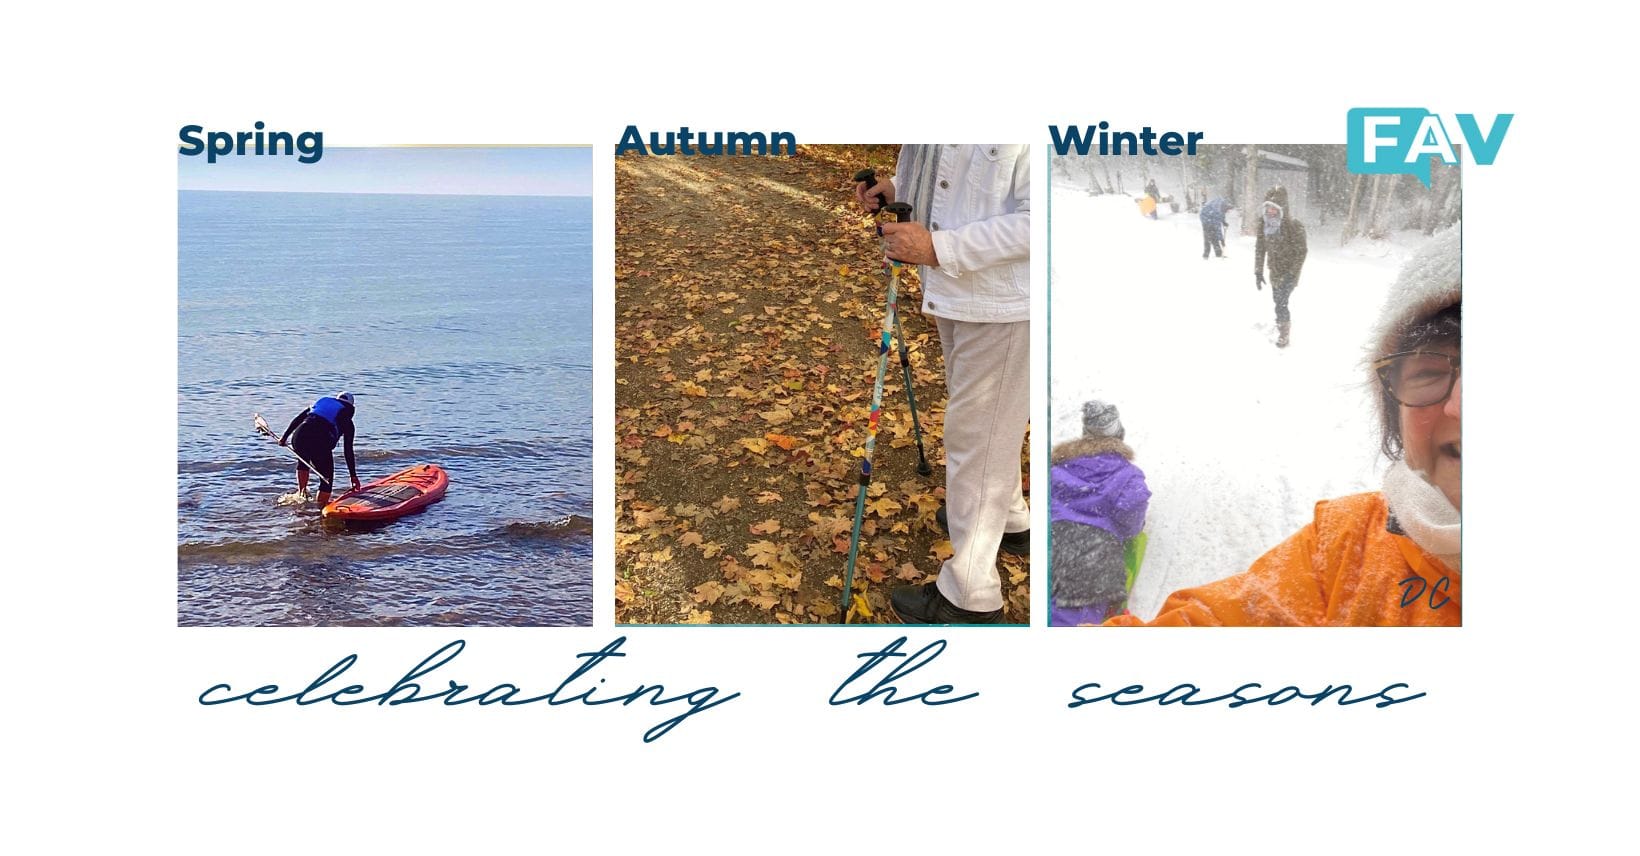 Author, Deborah Clarke Celebrating the seasons SPRING, AUTUMN, WINTER lakeside!